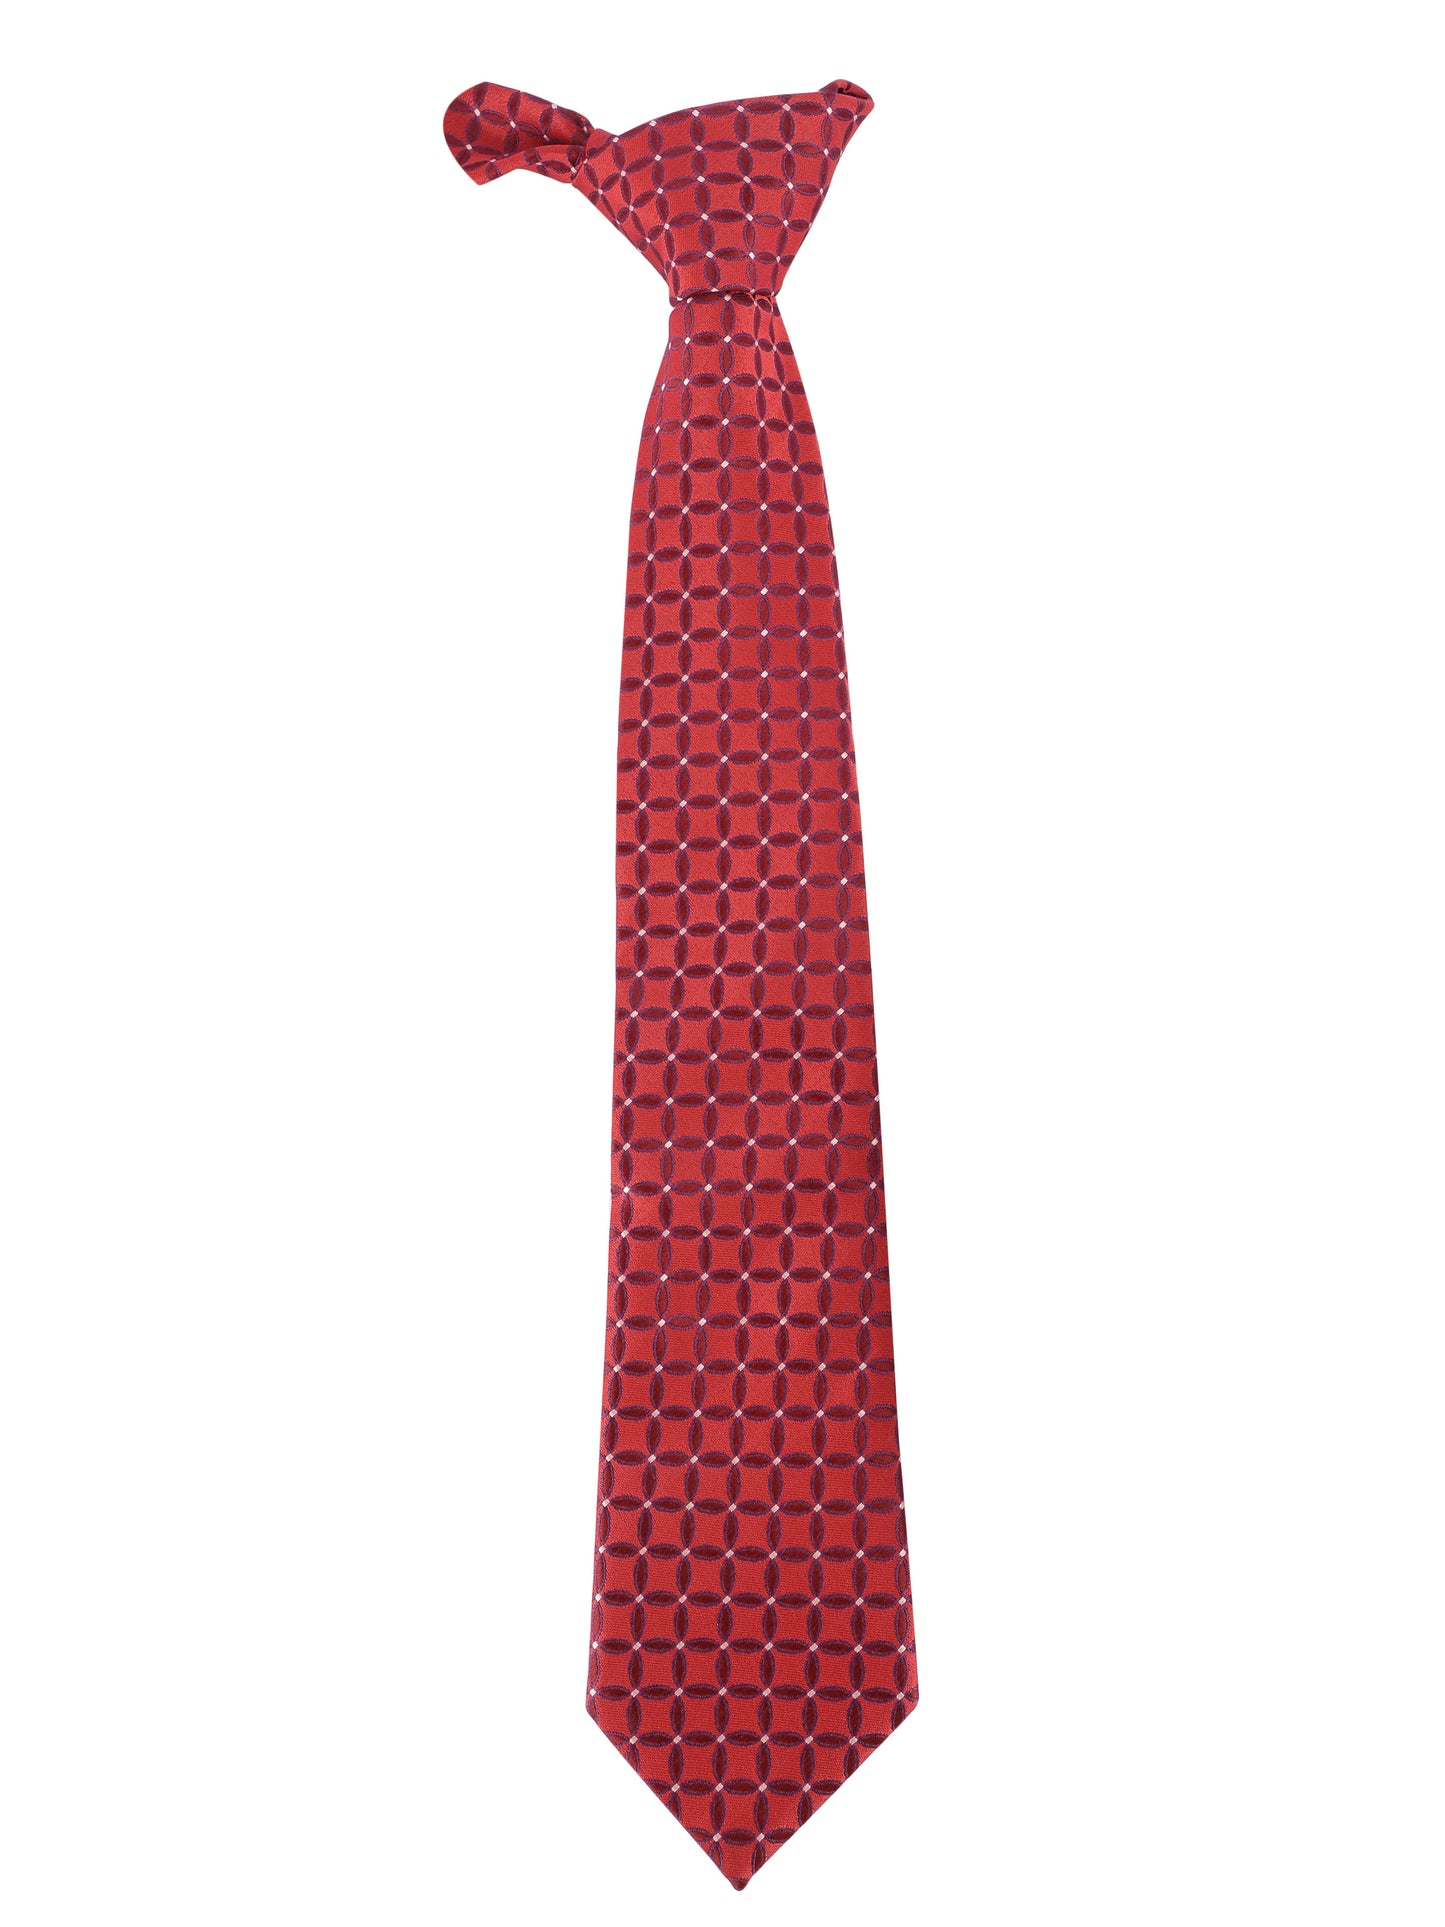 Alvaro Castagnino Microfiber Red Colored Necktie for Men